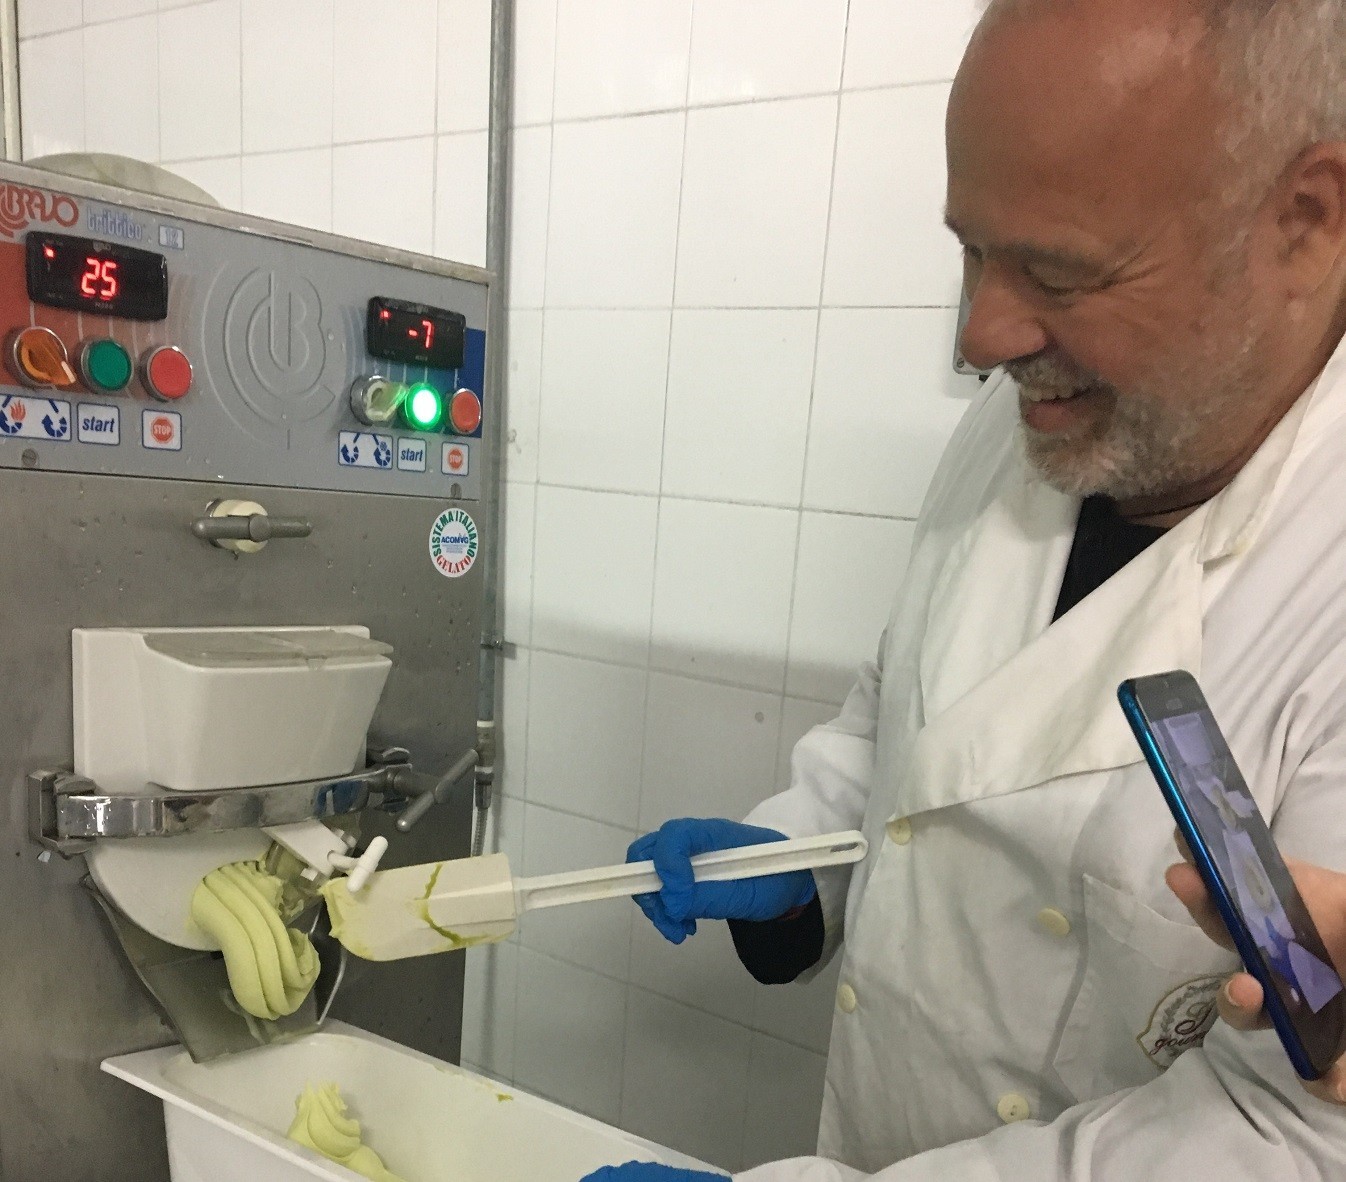 Chatzilia Food Innovation: Η ελληνική επιχείρηση που γνώρισε στους Αμερικανούς το «παγωτό του αστροναύτη» (pic)